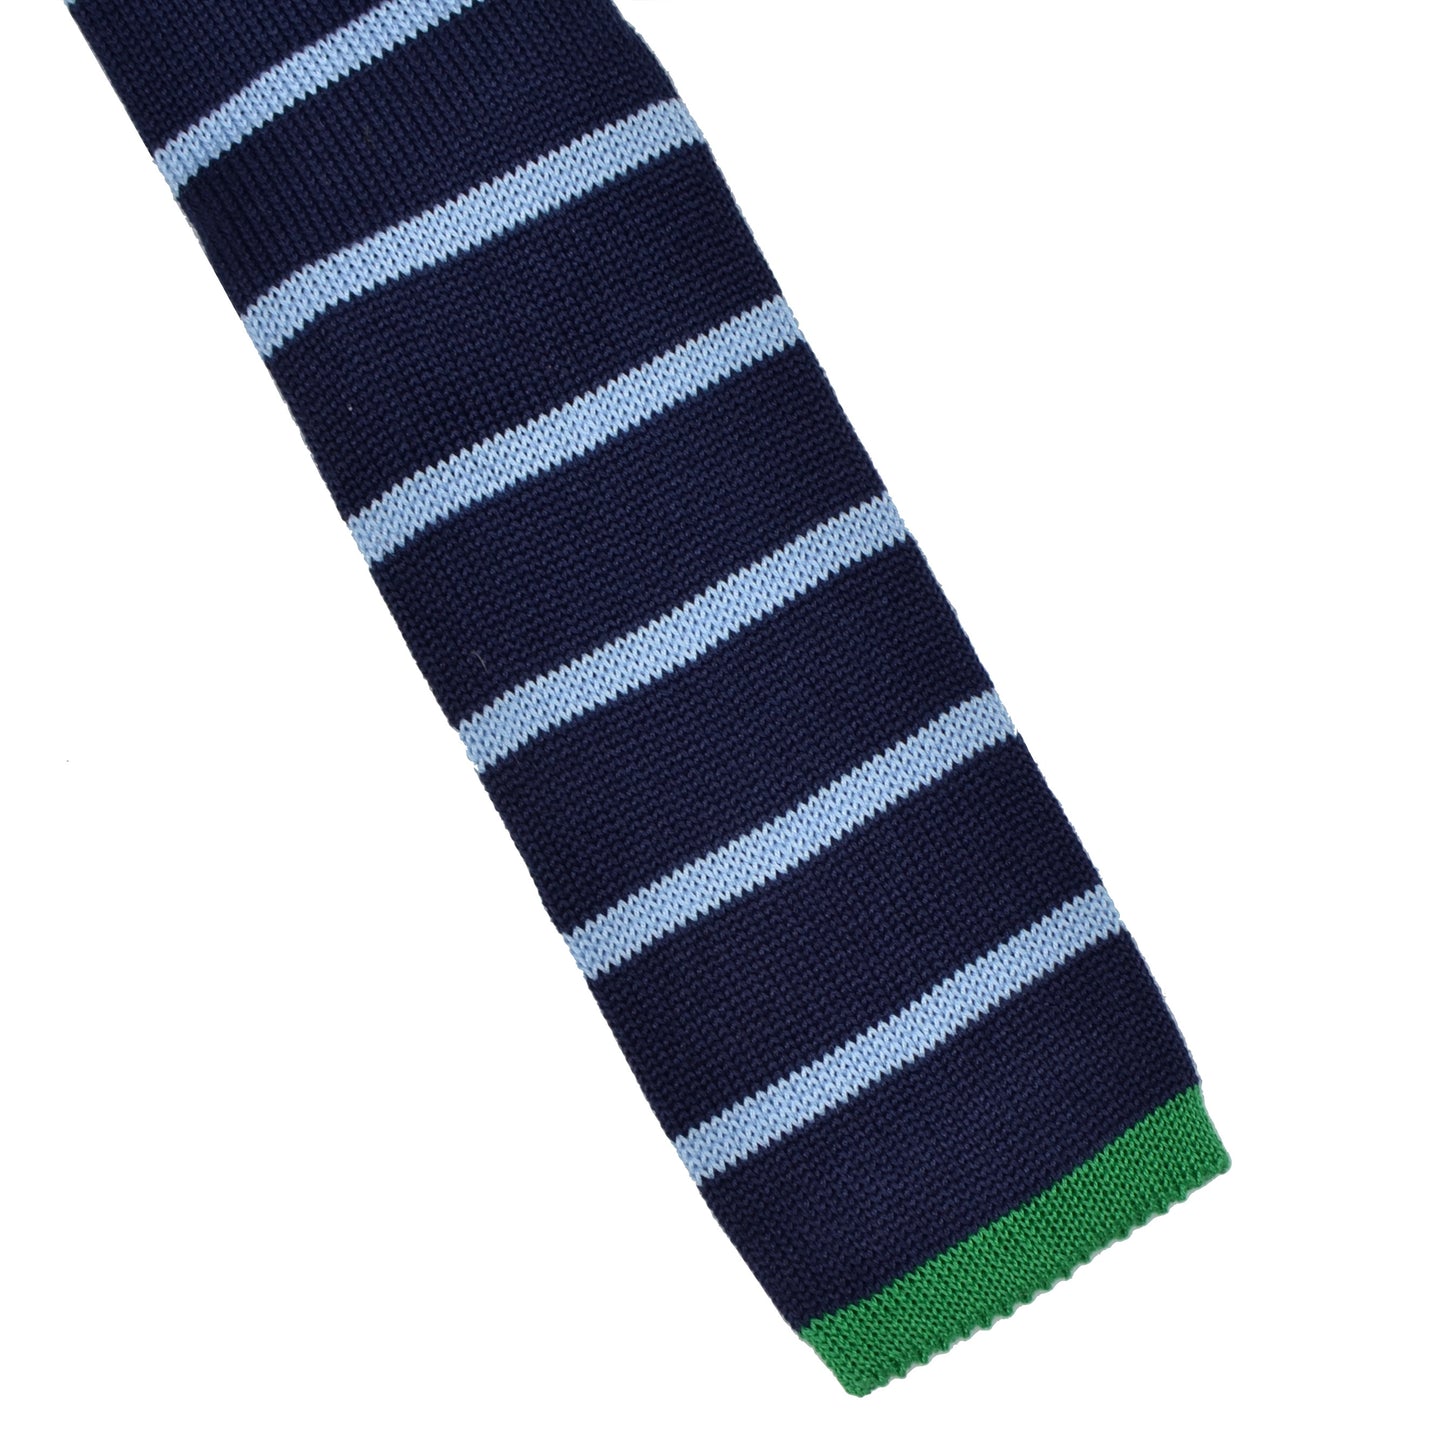 Camp David Cotton Knit Tie - Blue Striped